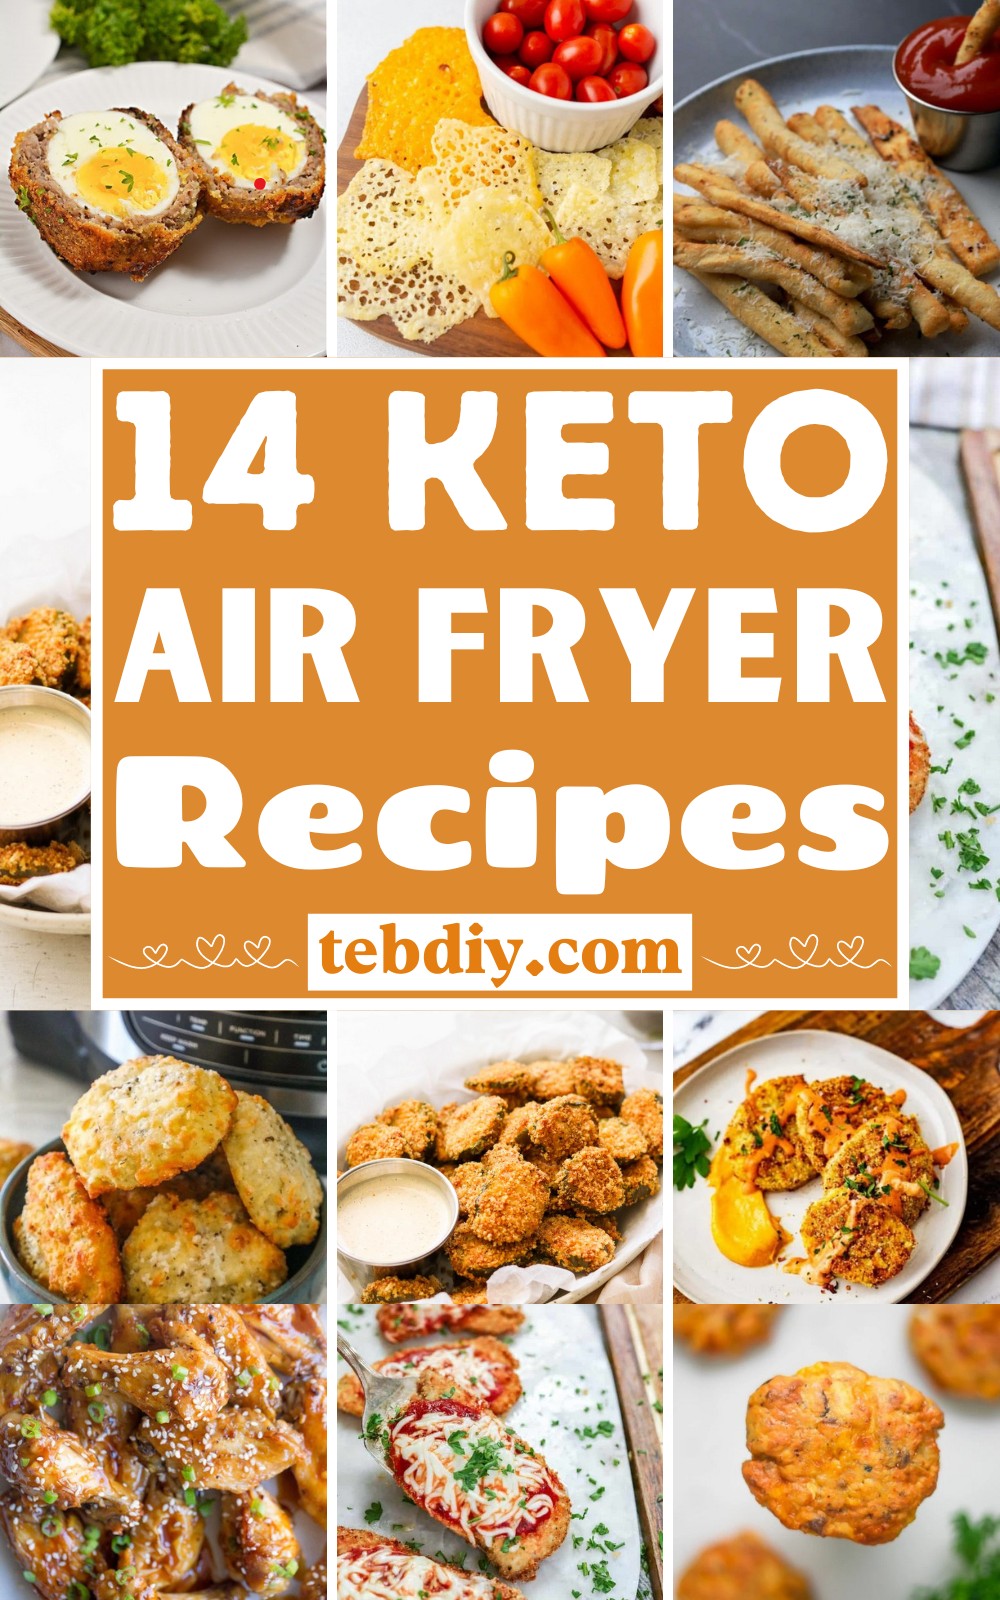 14 Keto Air Fryer Recipes